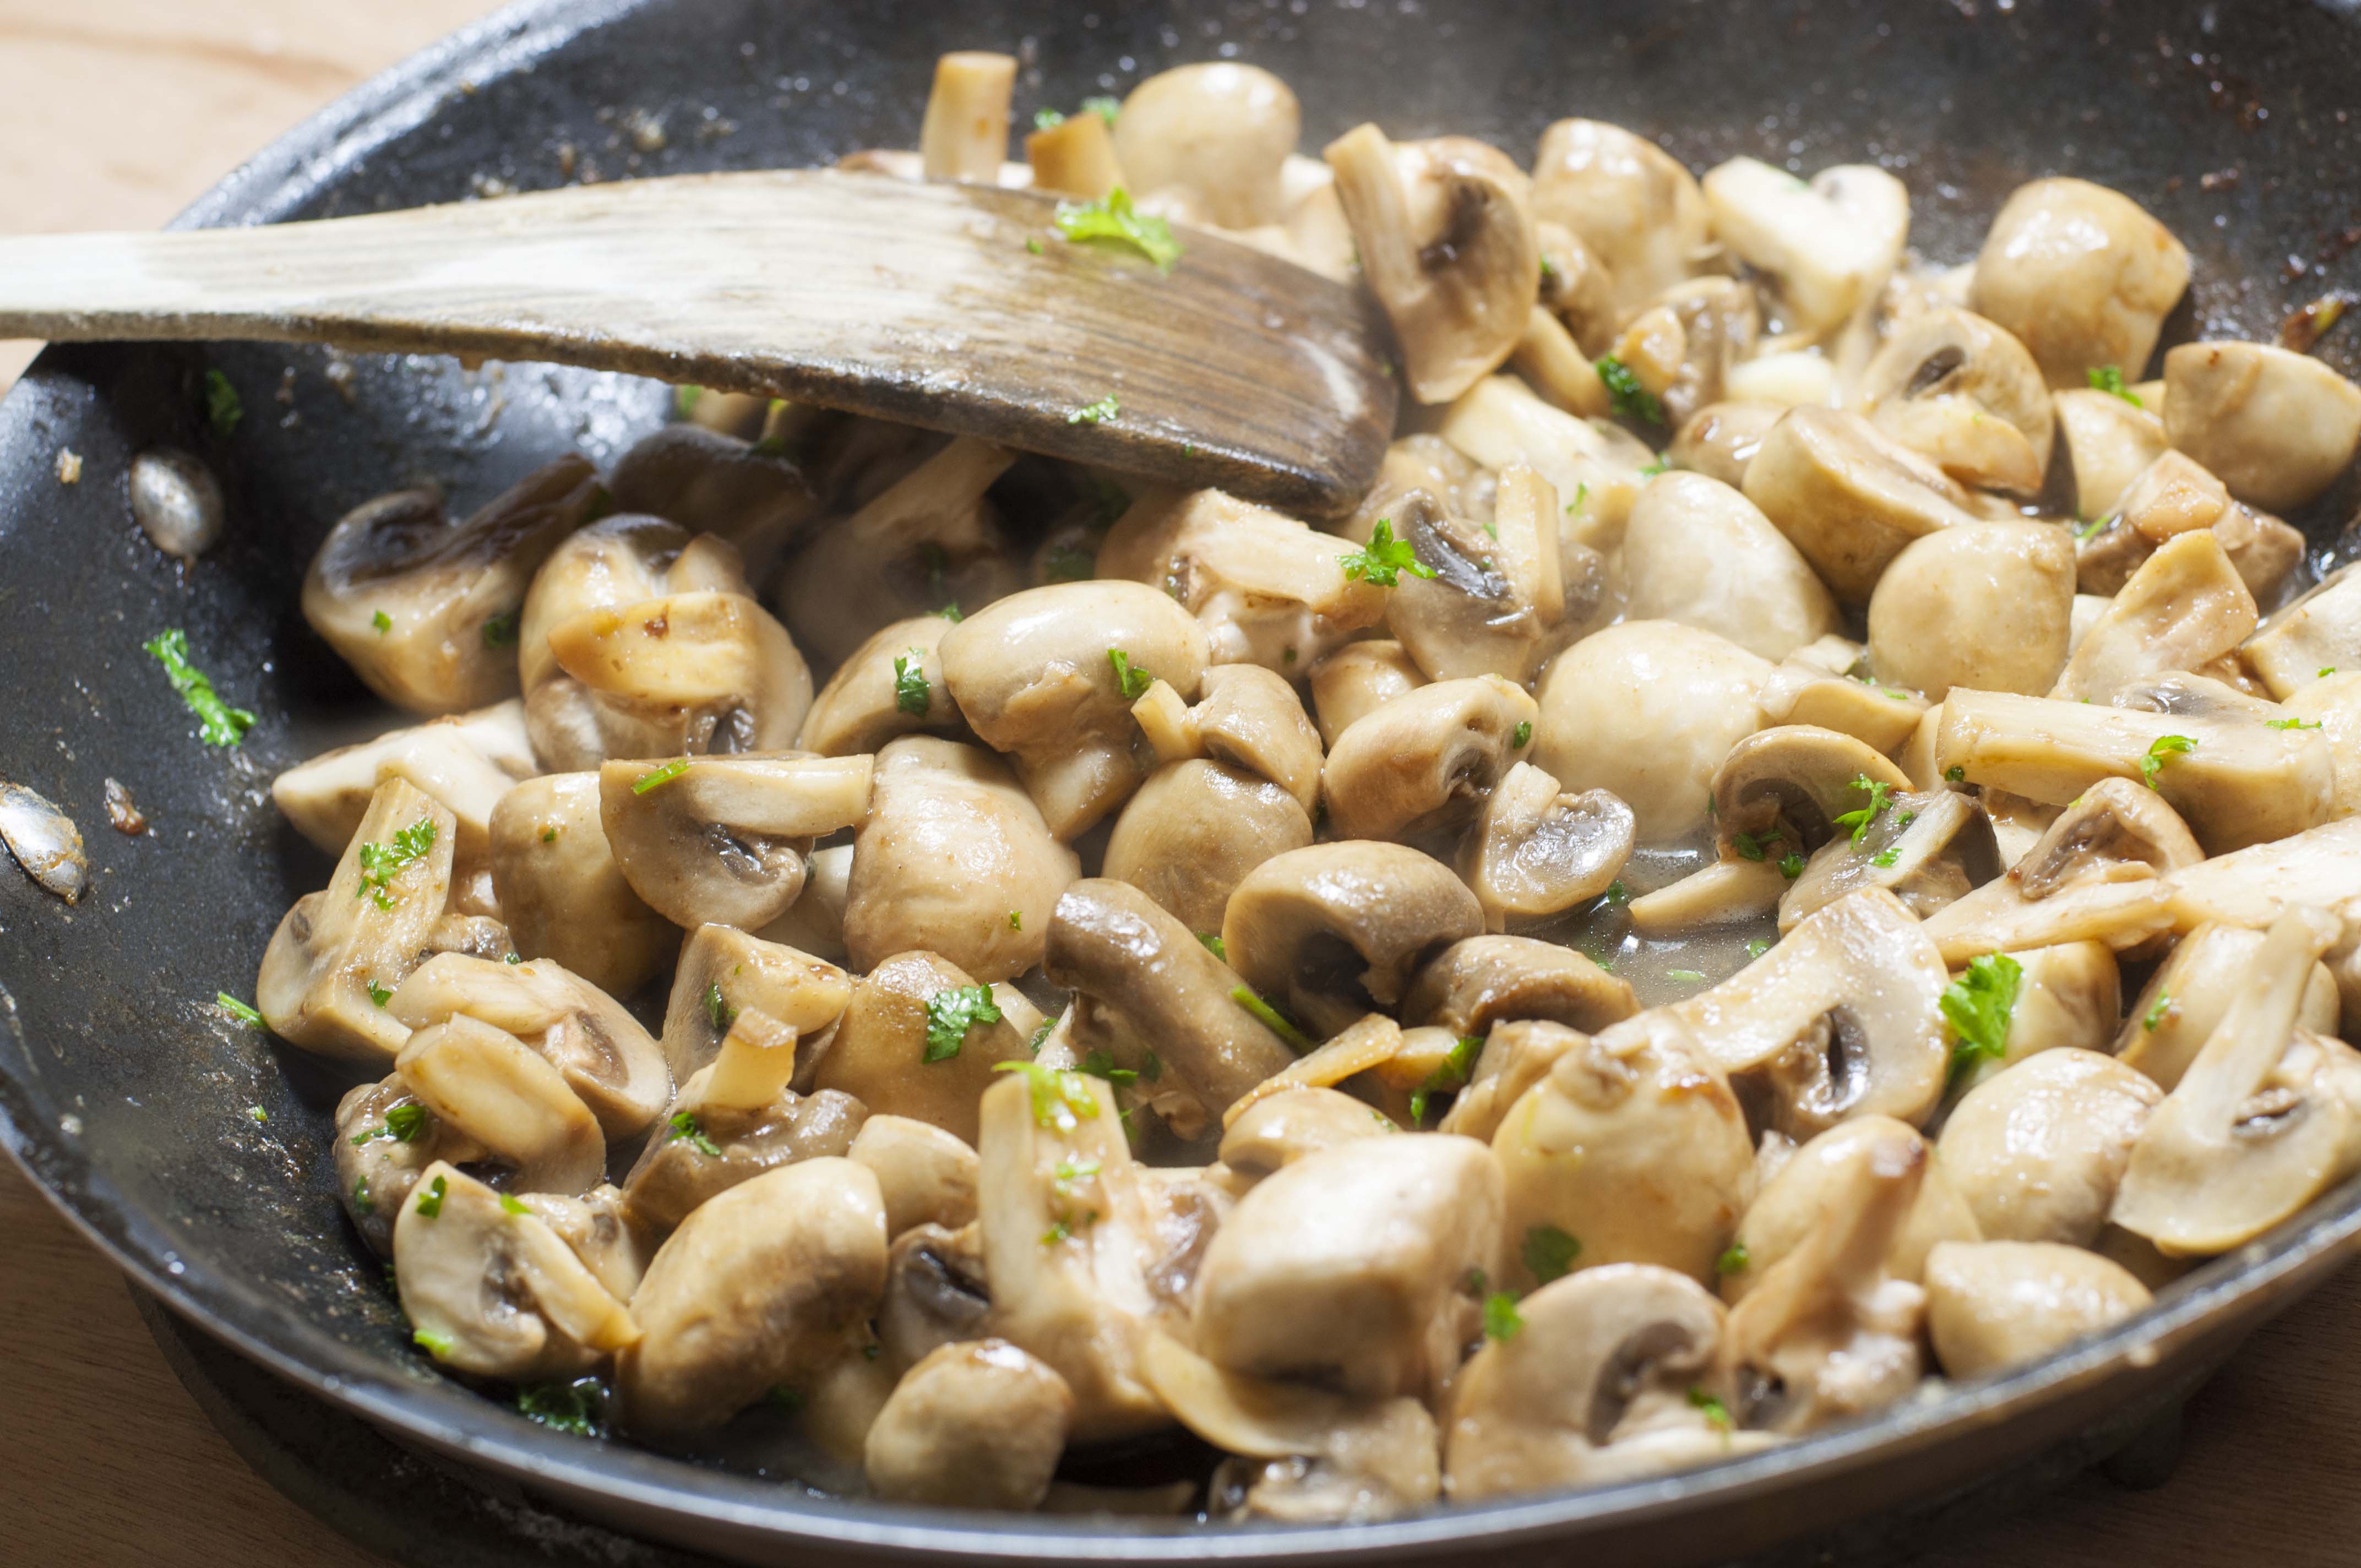 Stir fry the mushrooms with garlic